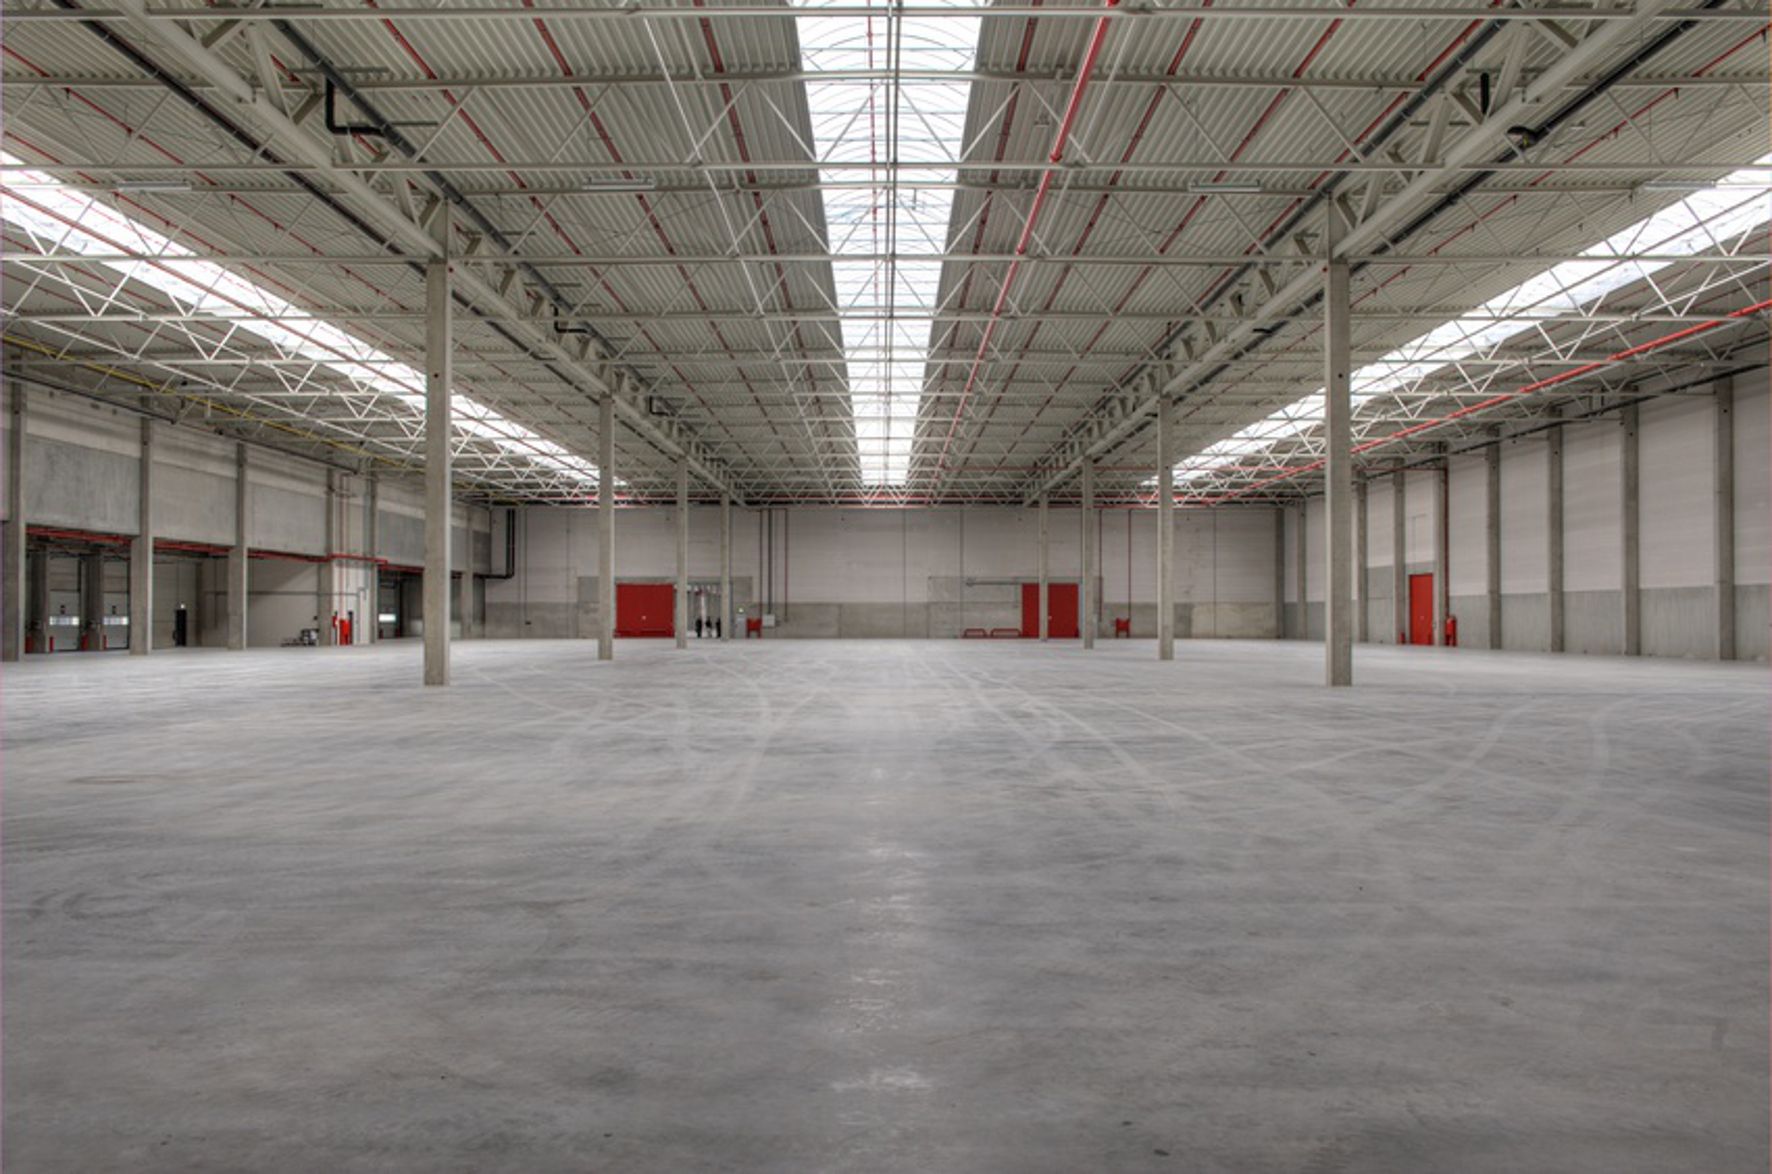 Logivest vermittelt 7.300 Quadratmeter Logistikfläche an die Rubix GmbH Bild